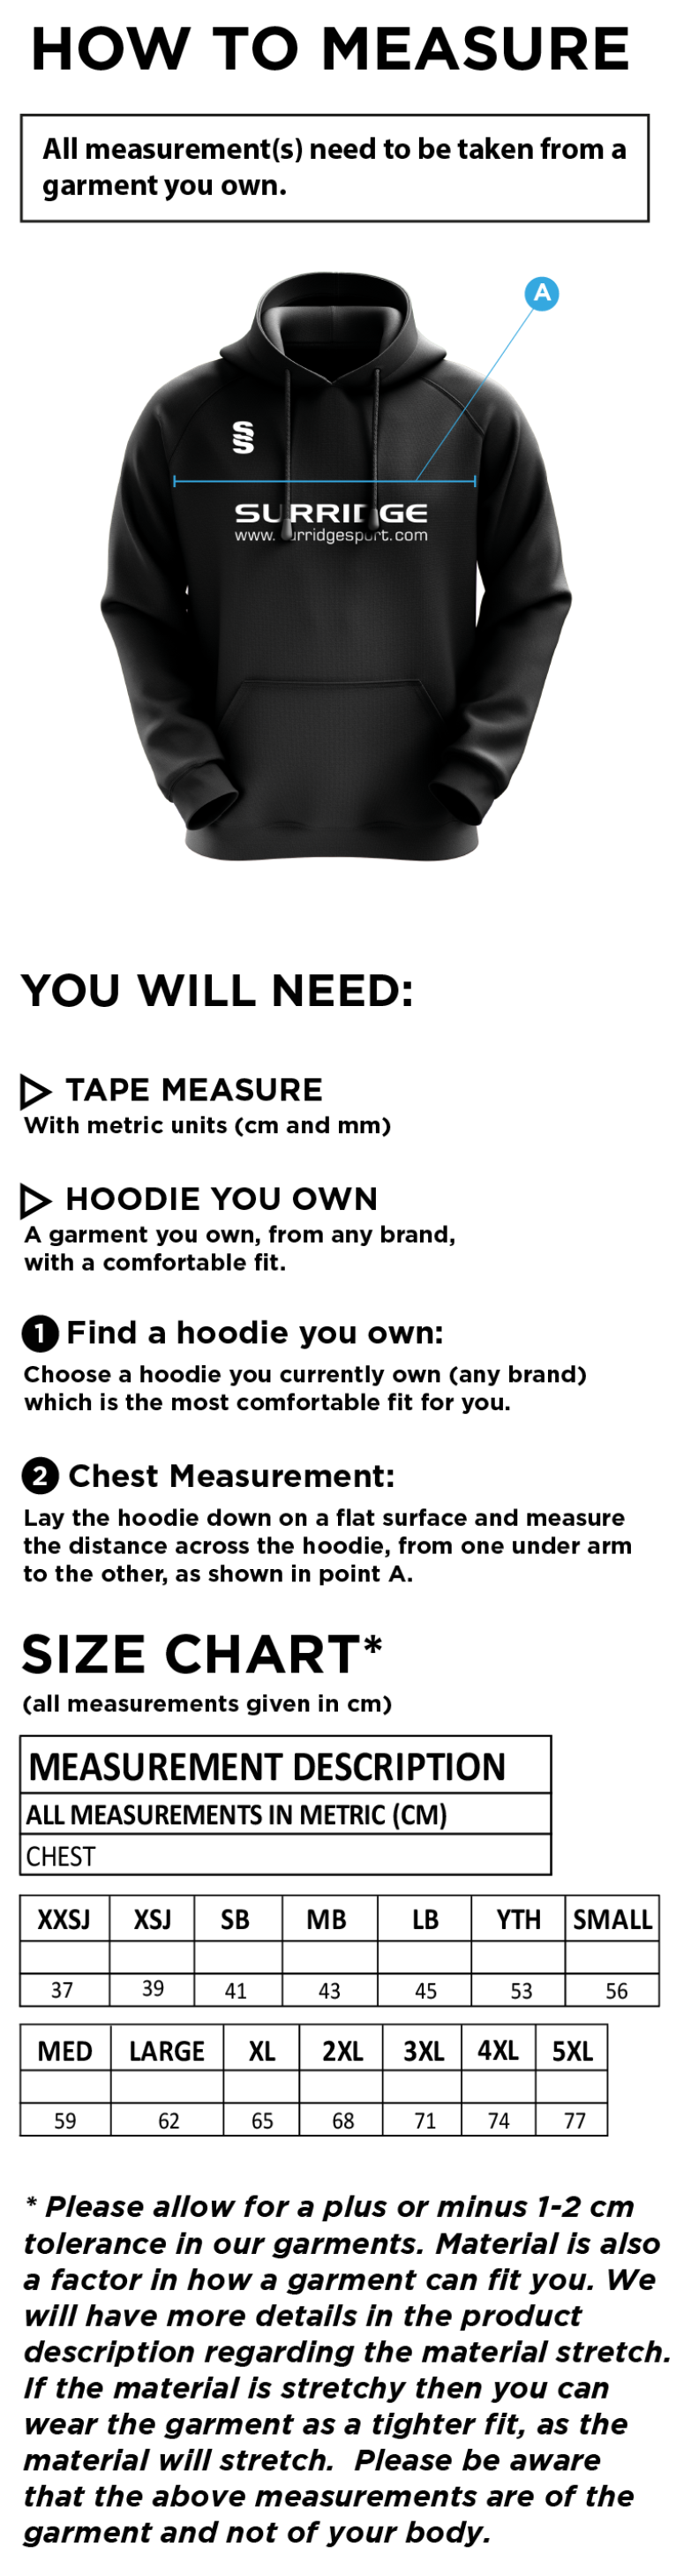 Women's Fuse Hoody : Black / White - Size Guide